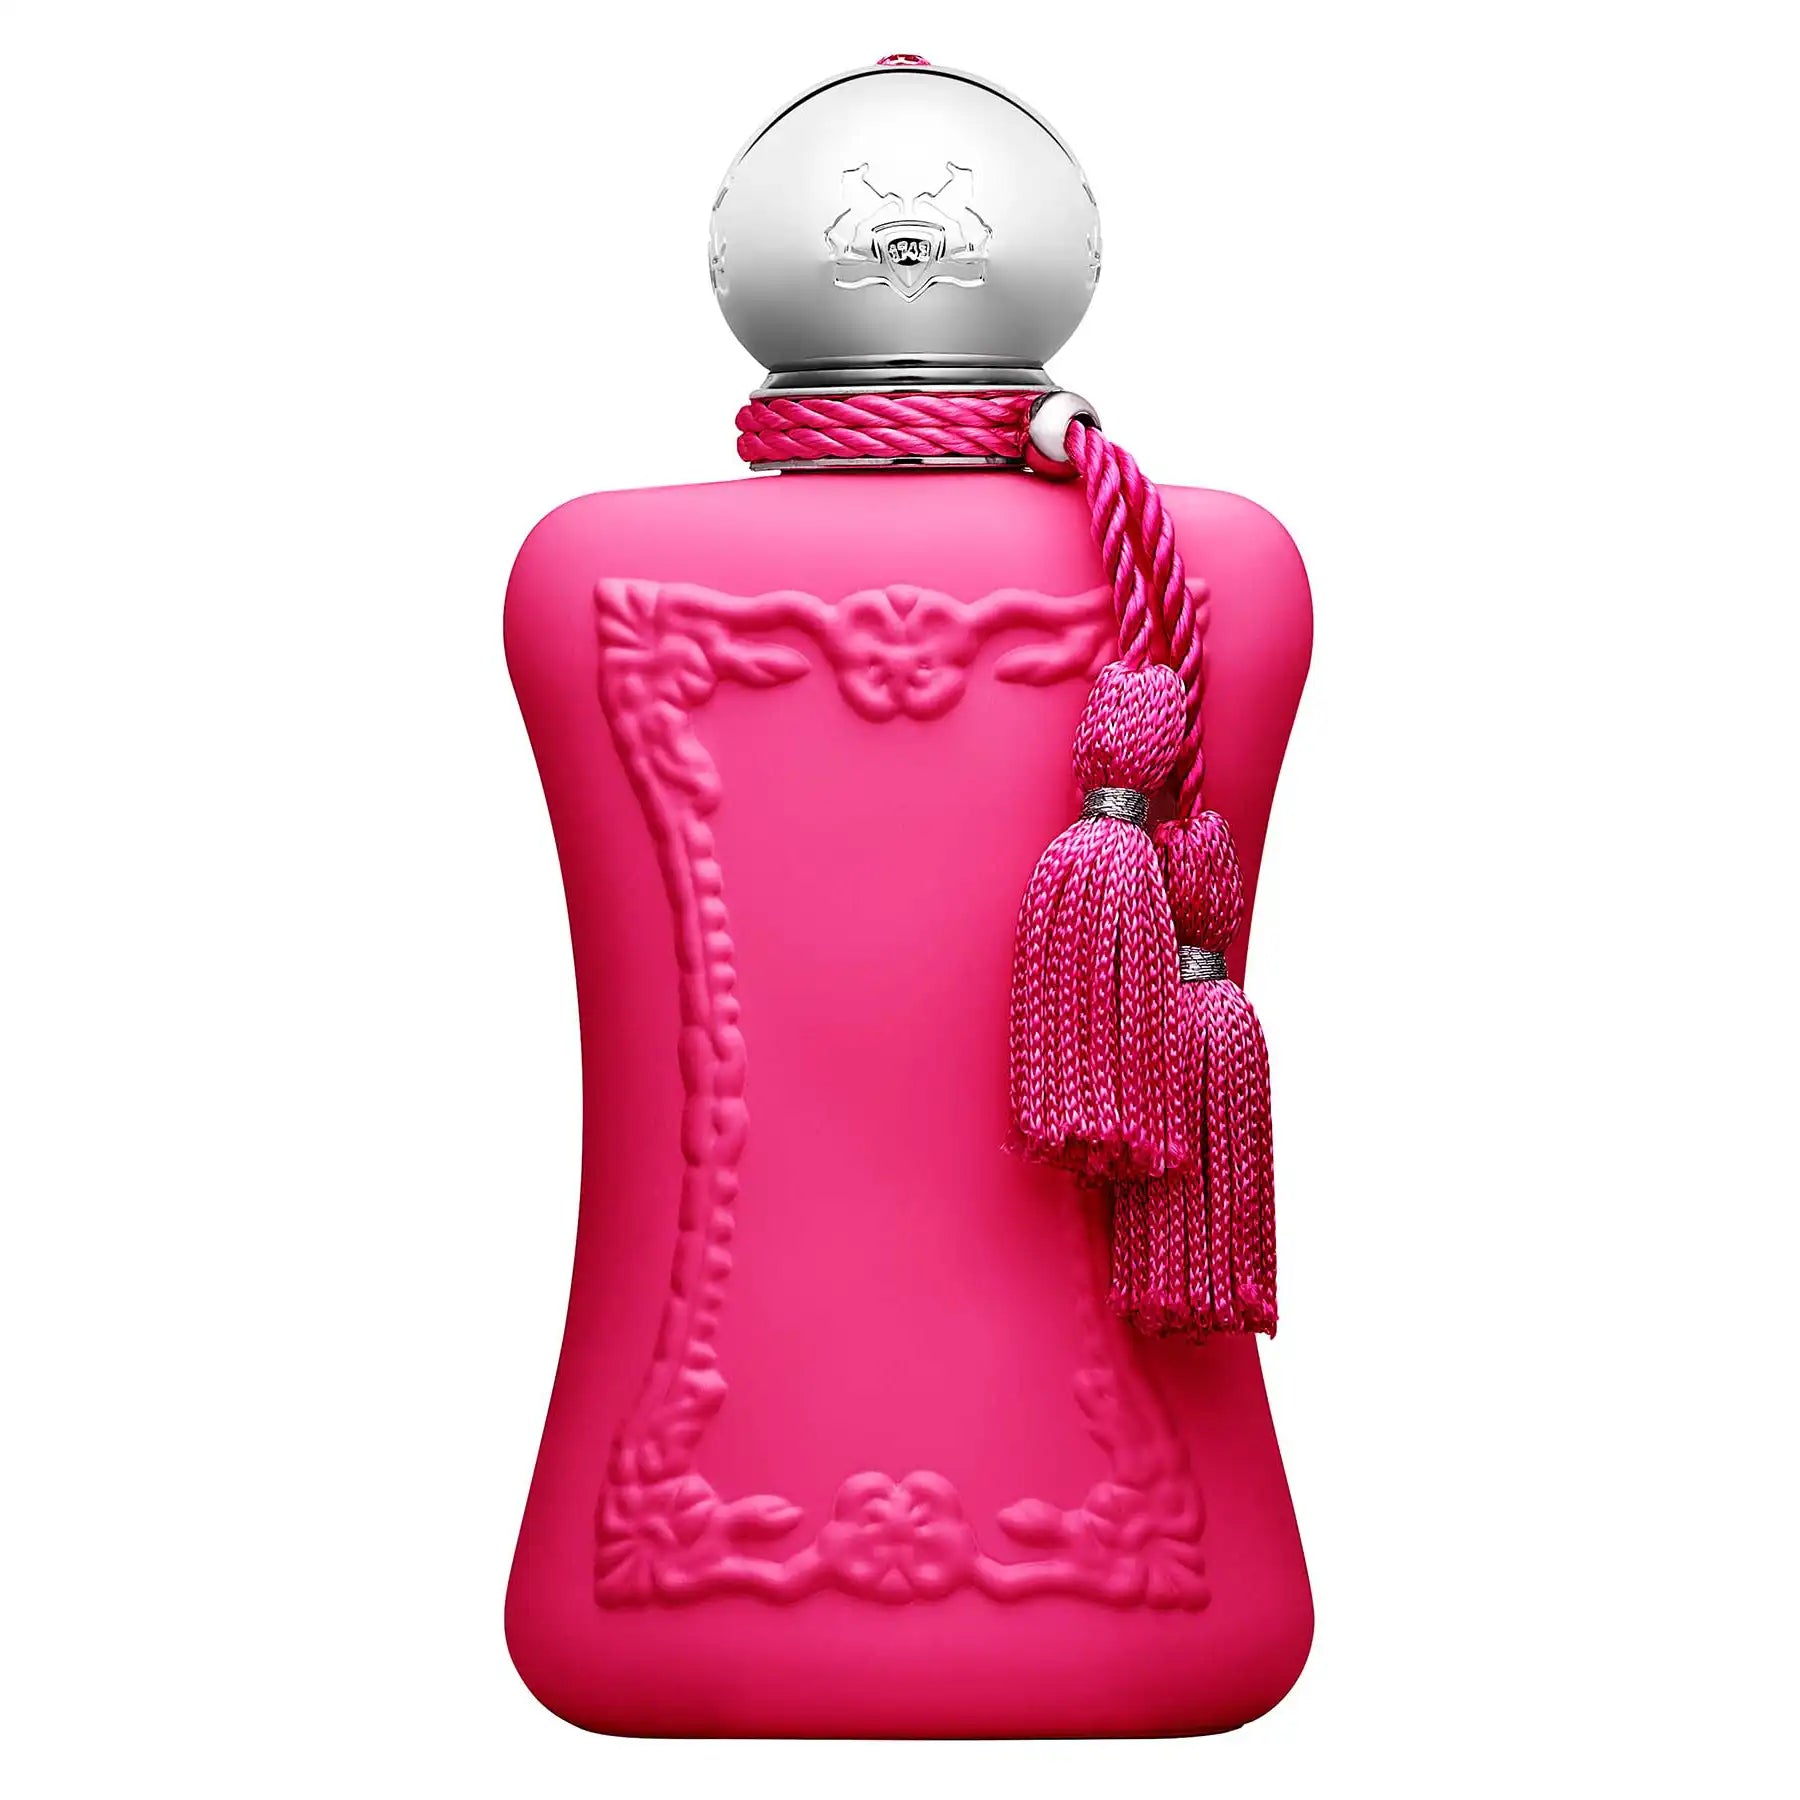 Parfums de Marly Oriana Eau de Parfum 75ml